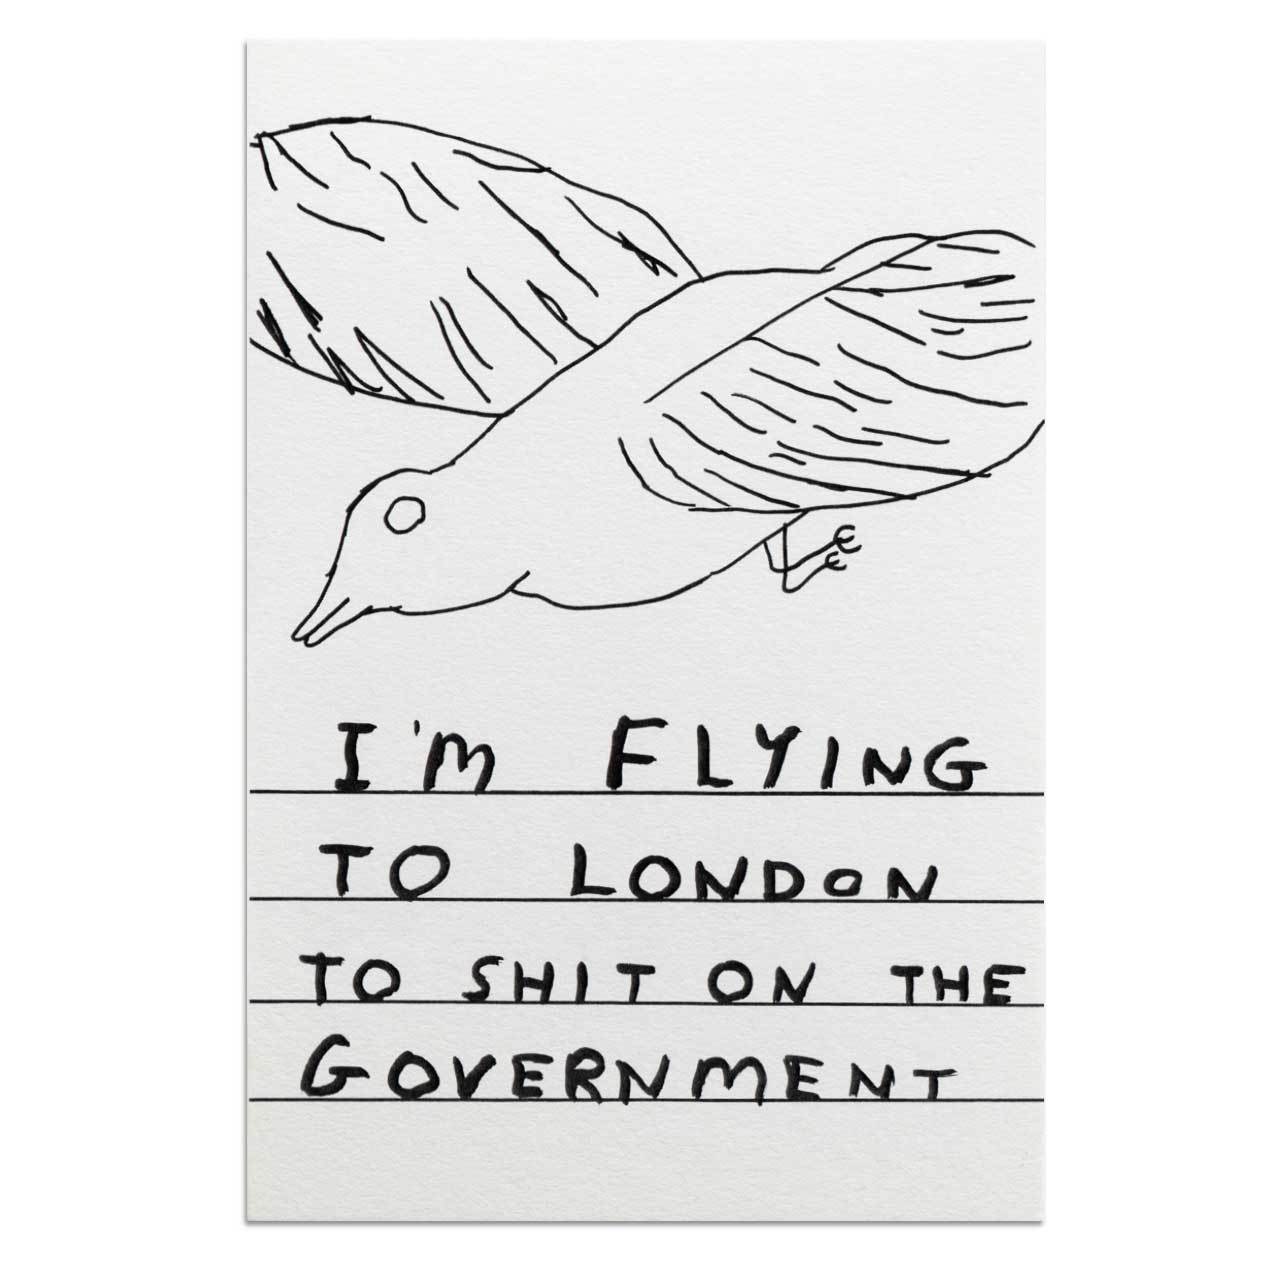 Shit On Government Postcard